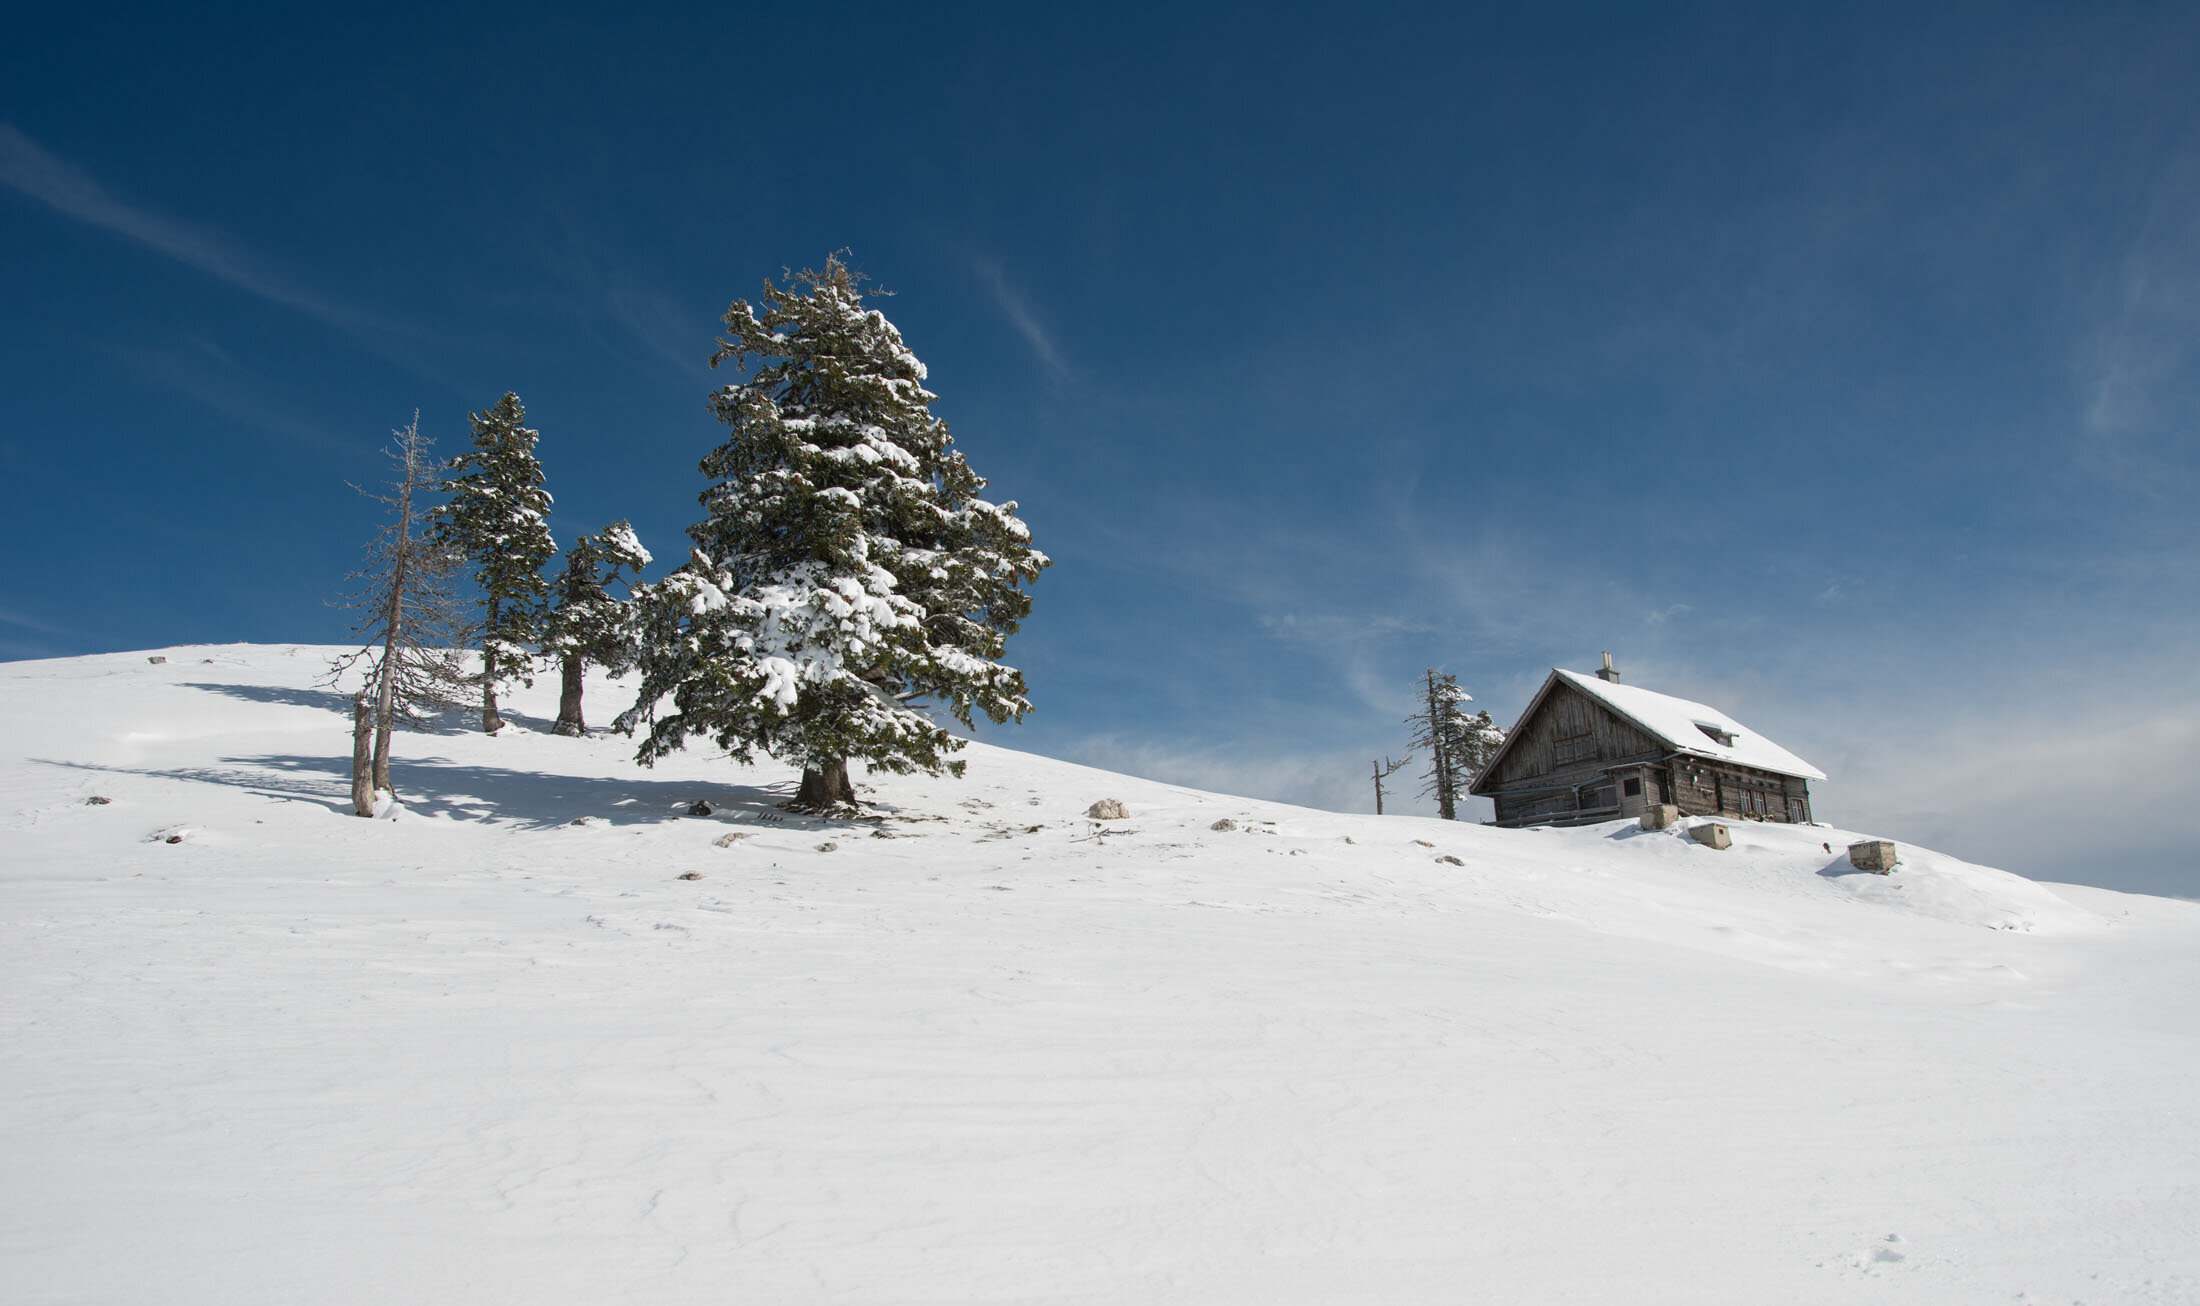 Mountain hut in snow